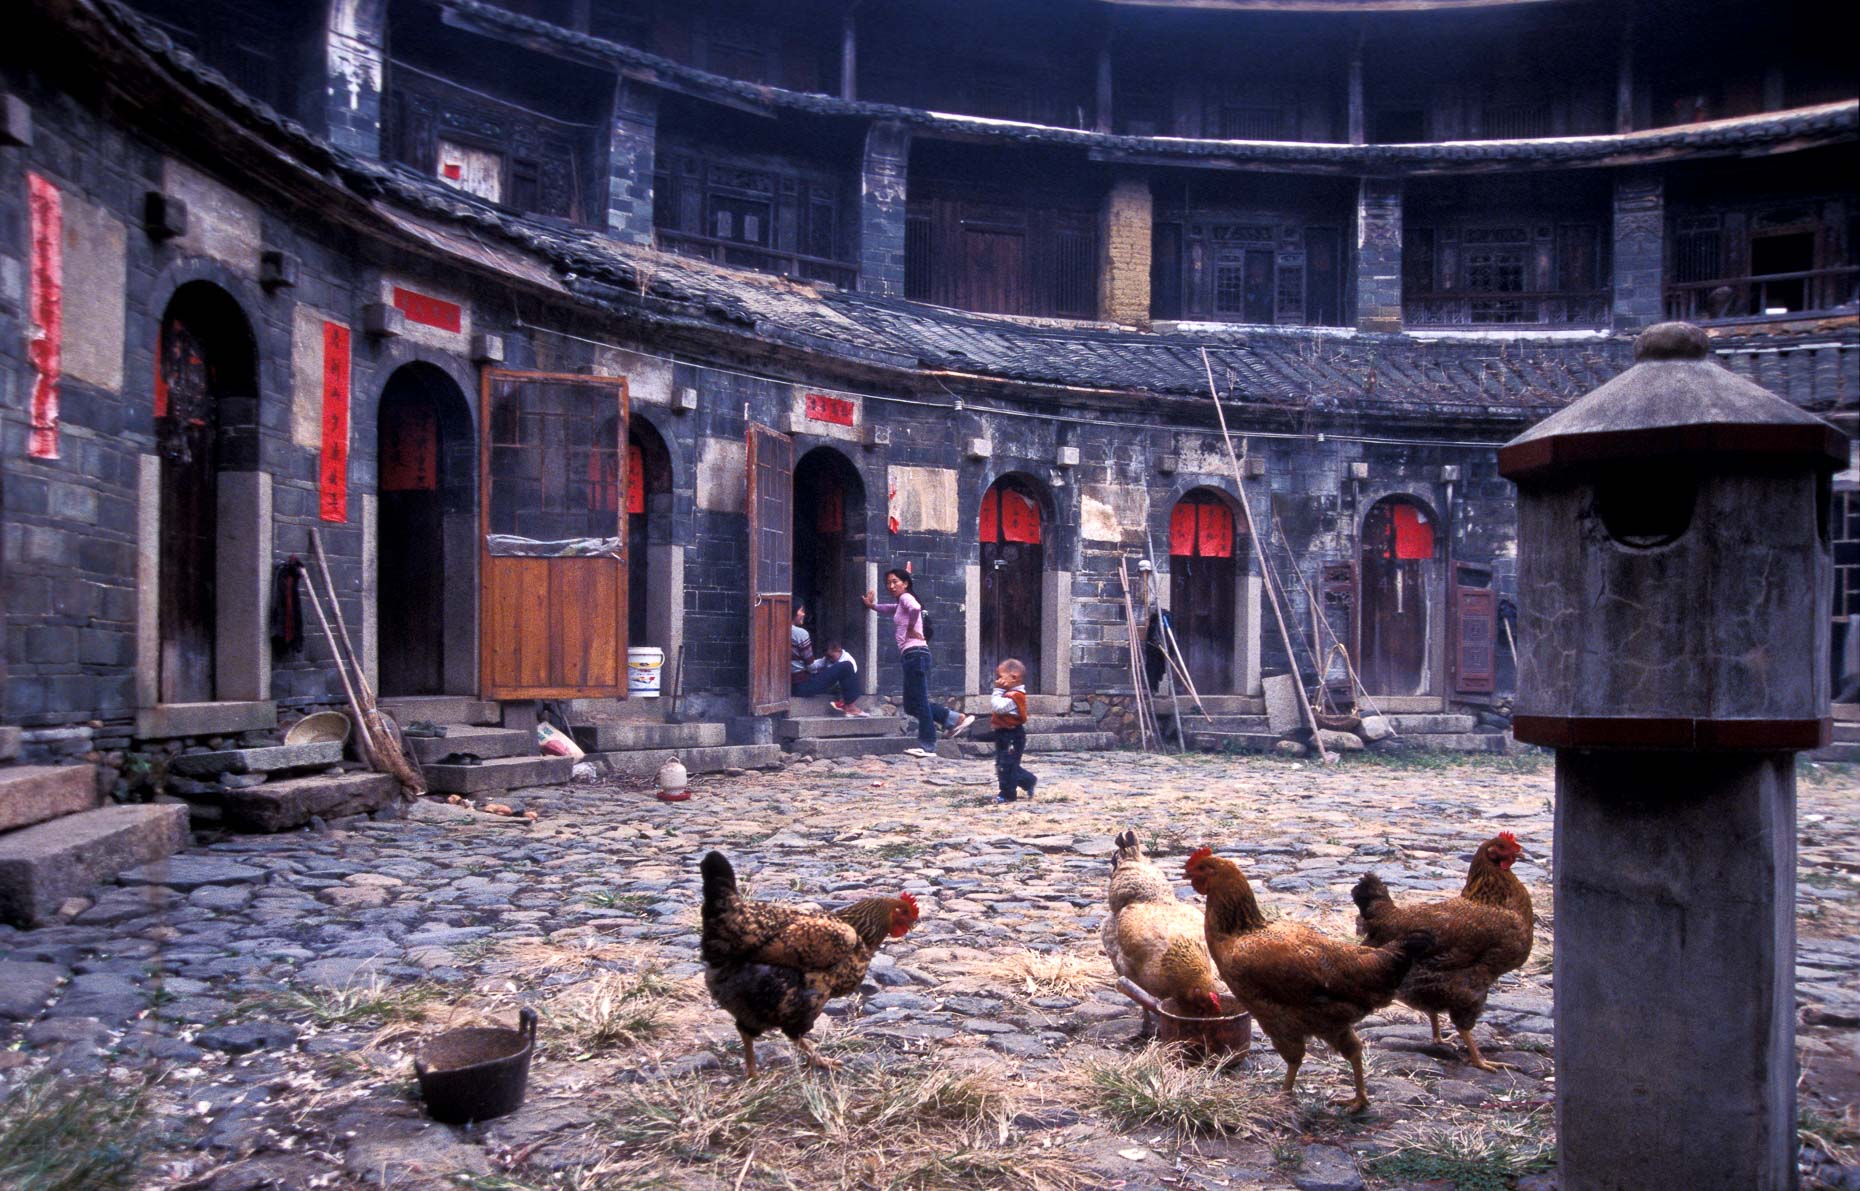 Traditional round house/ dwelling, China